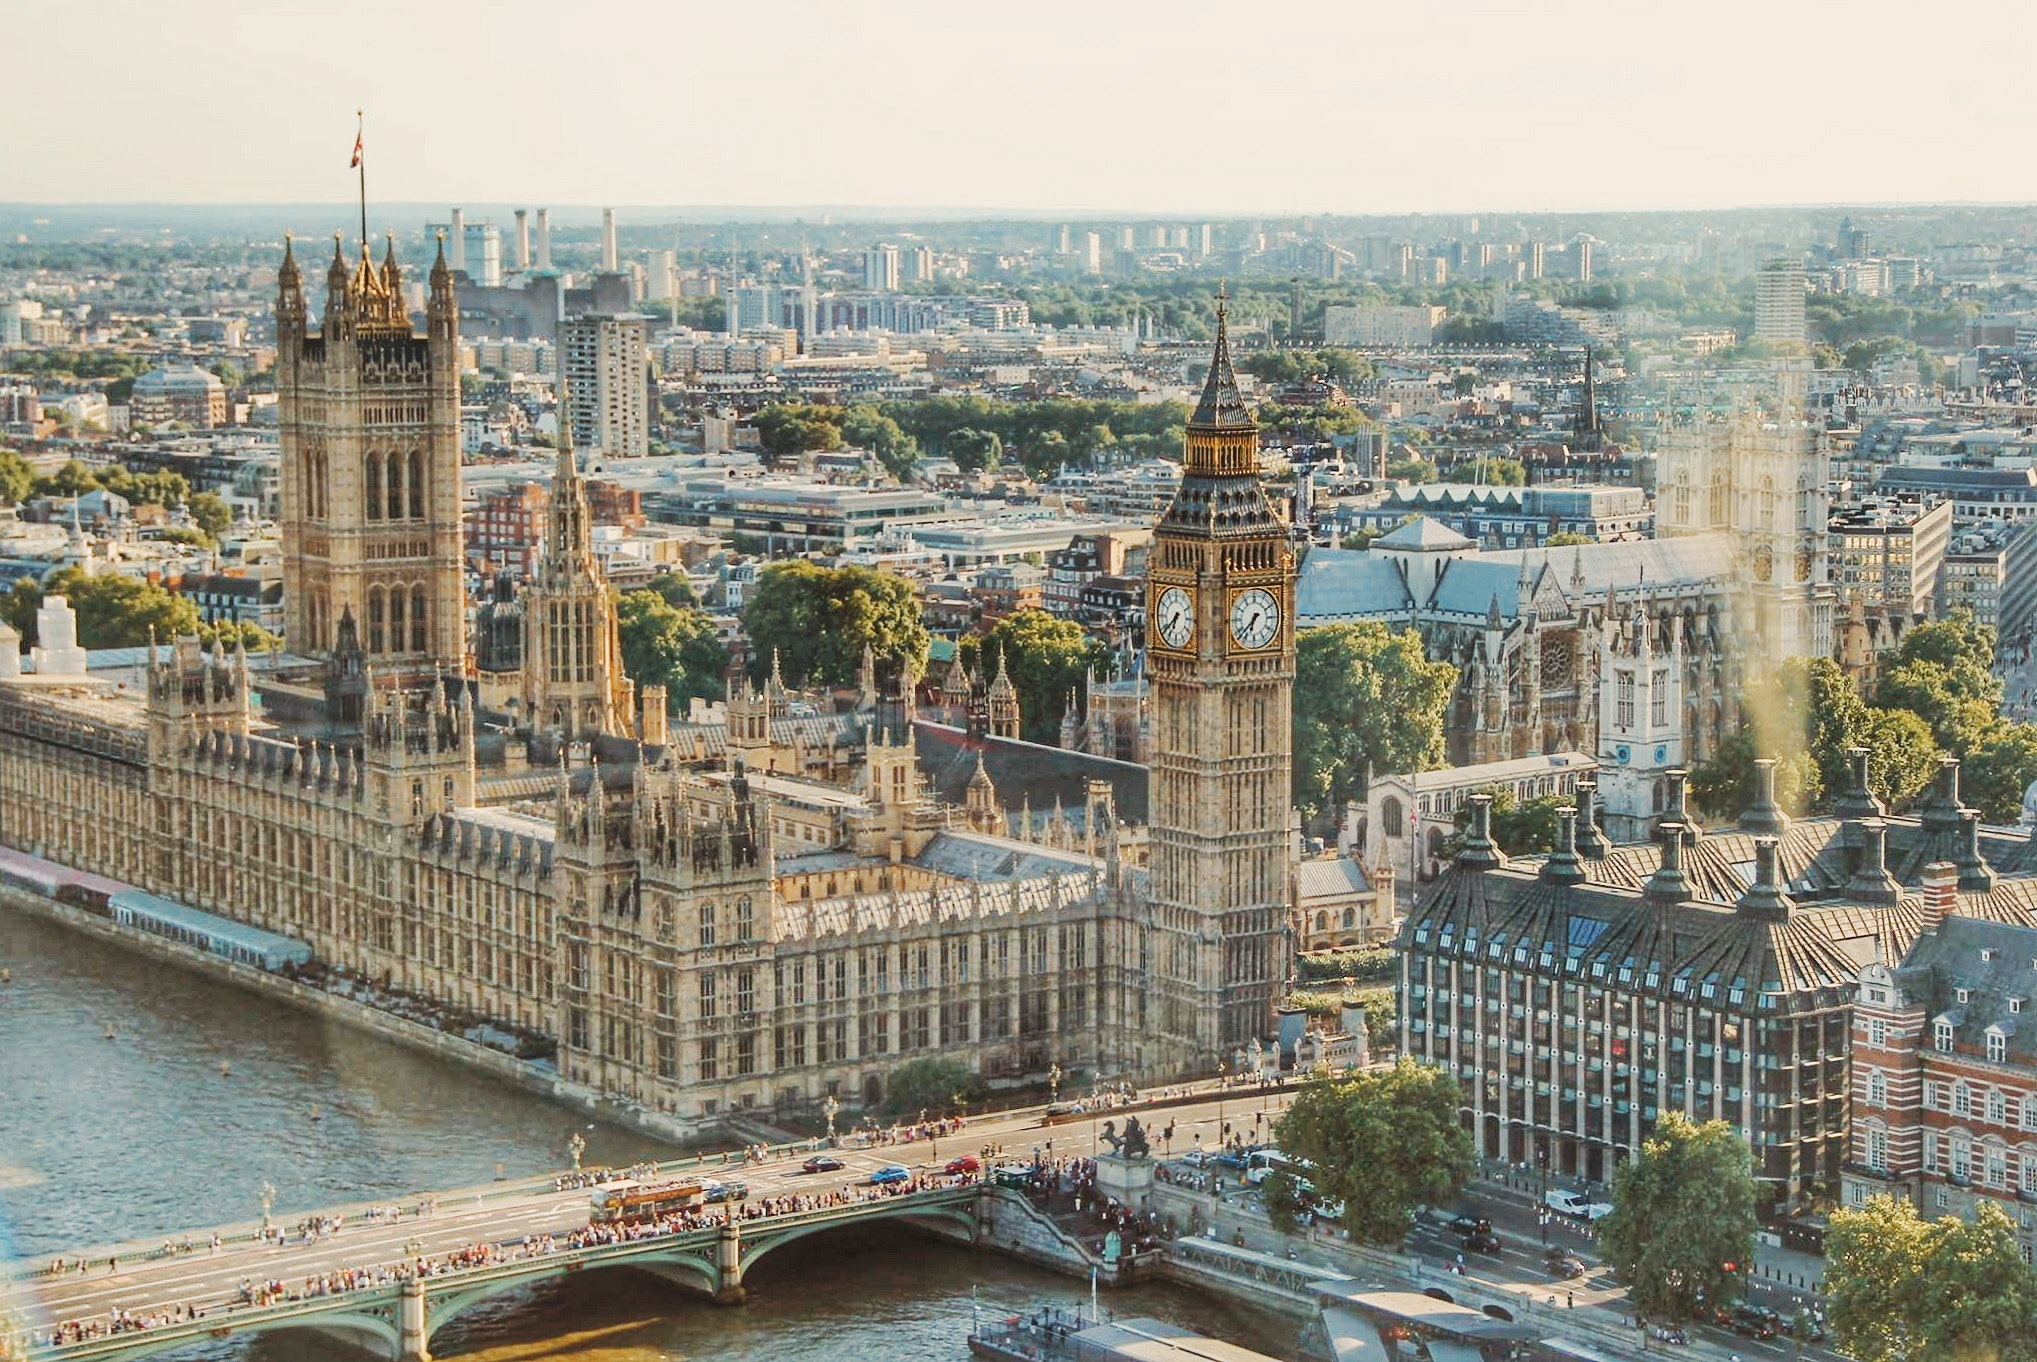 City View at London, Tall, Parliament, River, River thames, HQ Photo